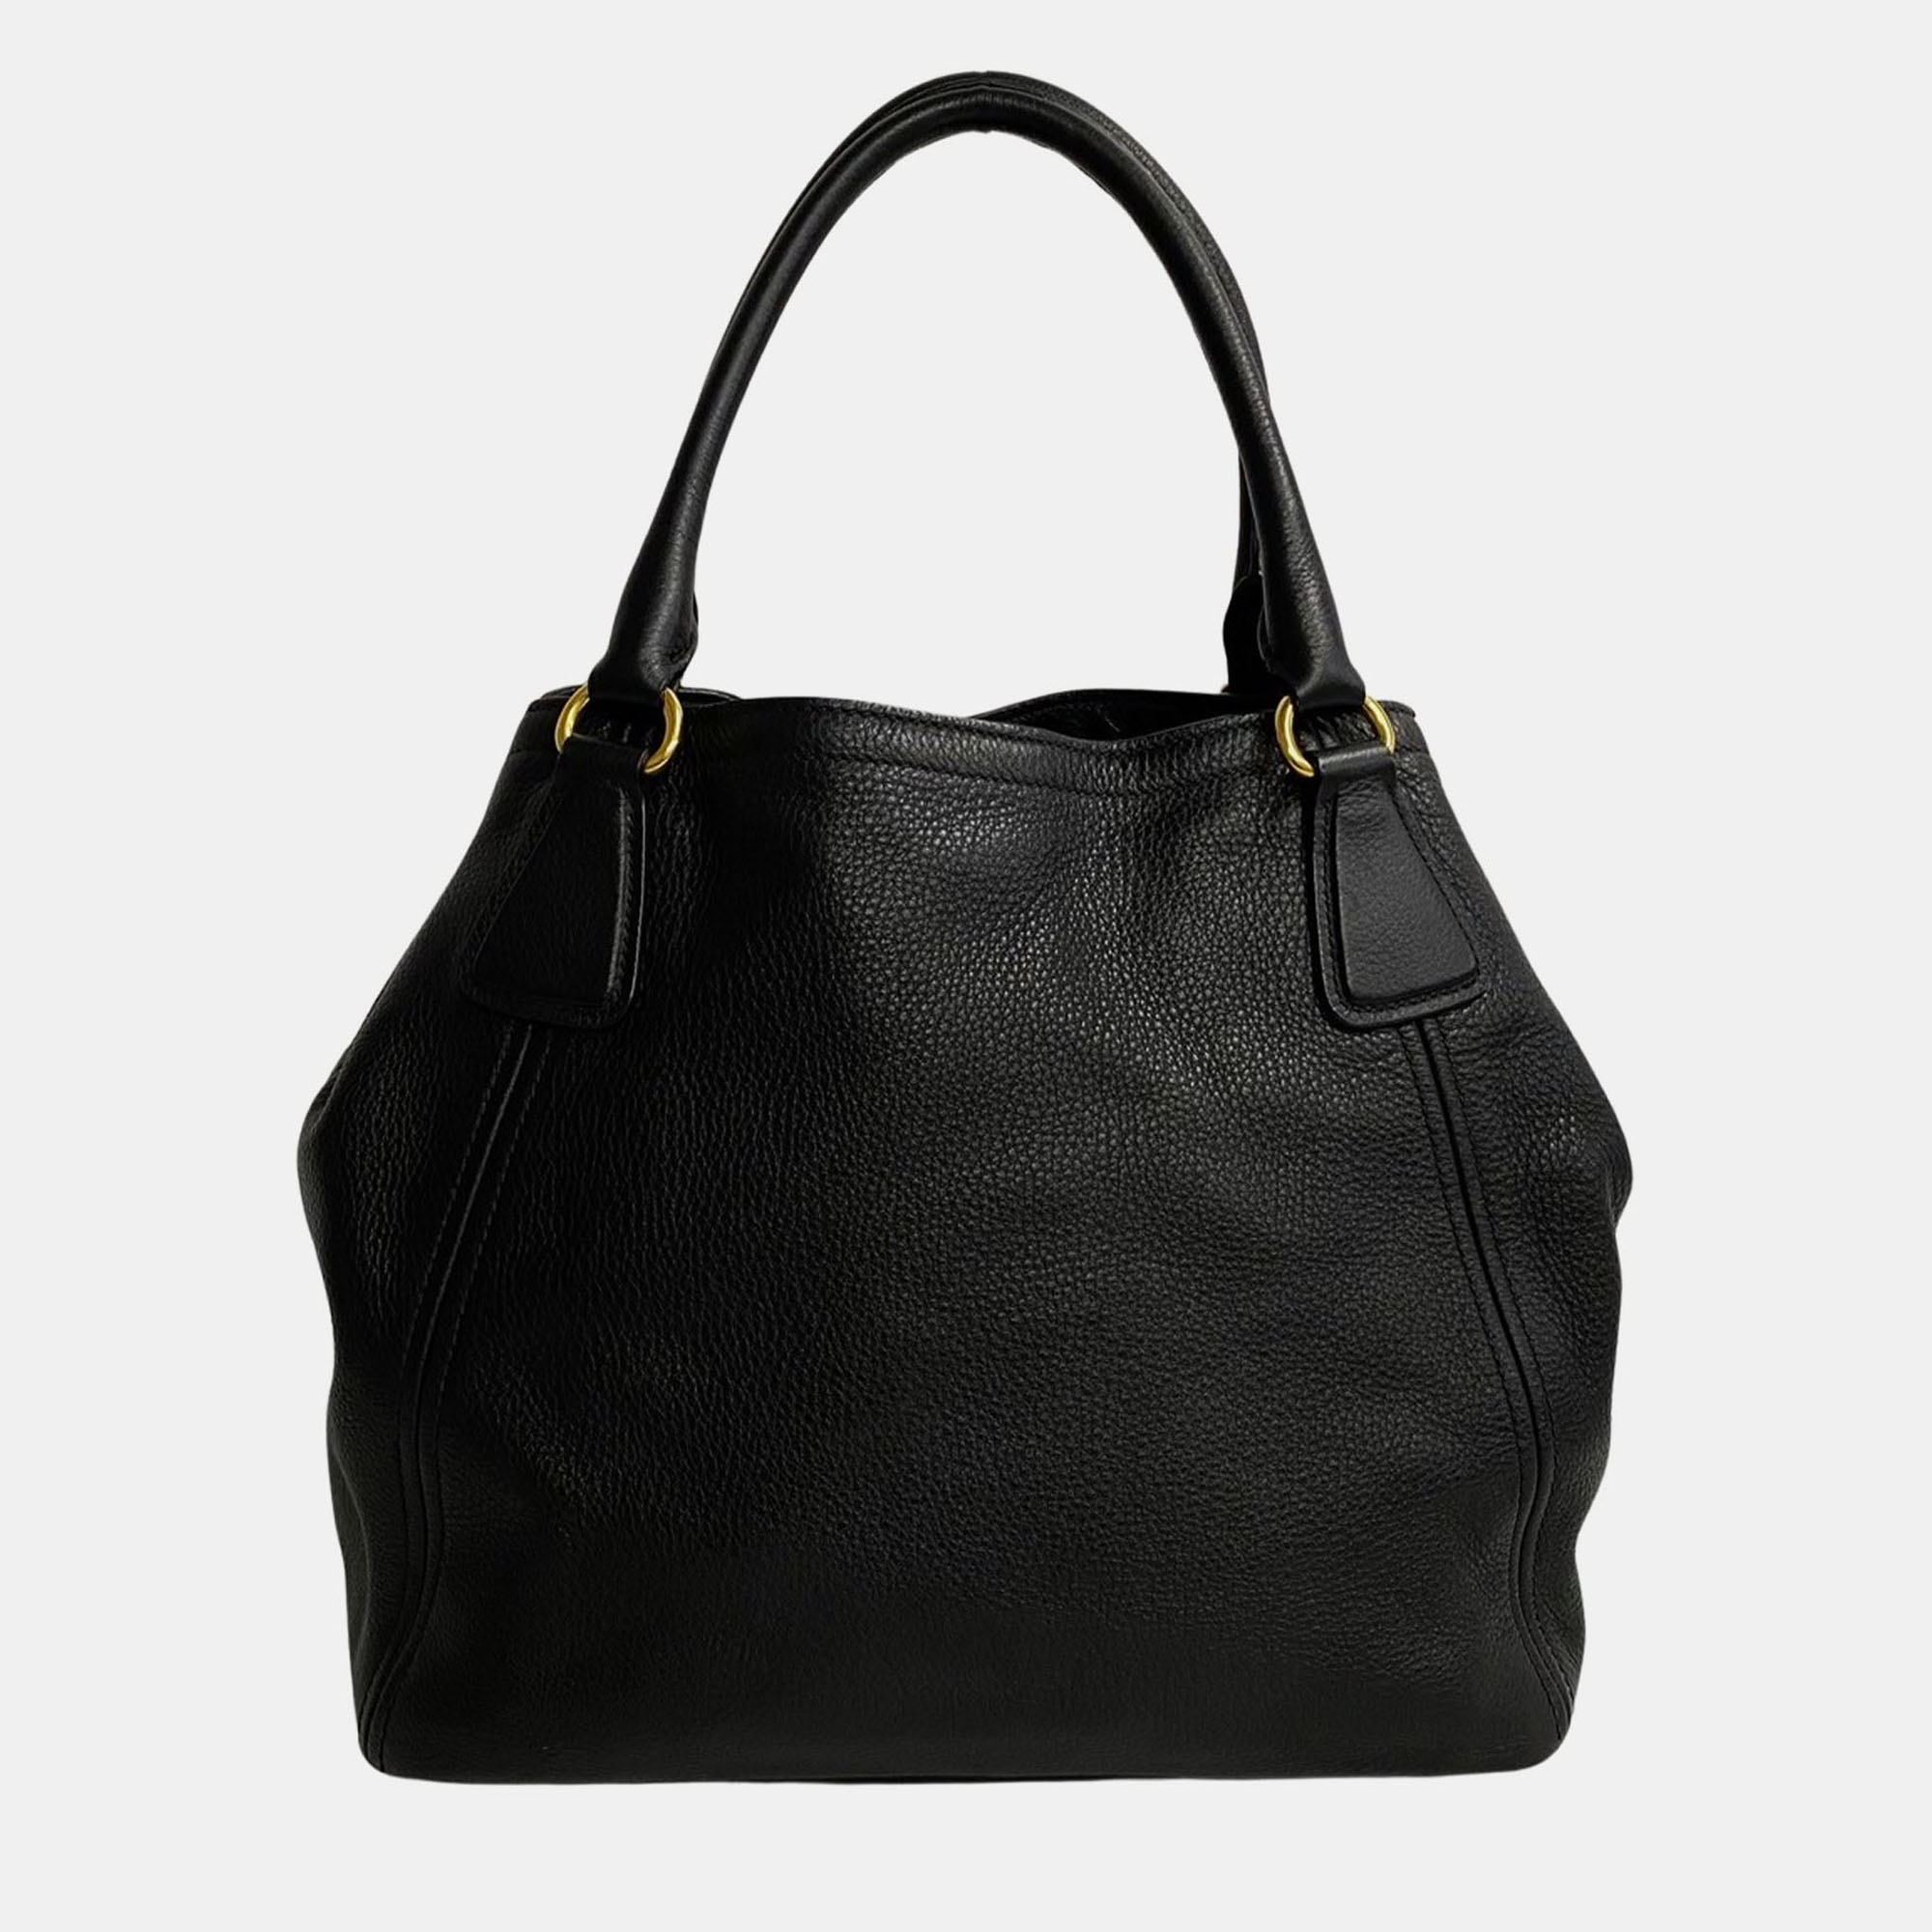 

Prada Black Leather Vitello Danio Shopper Tote Bag